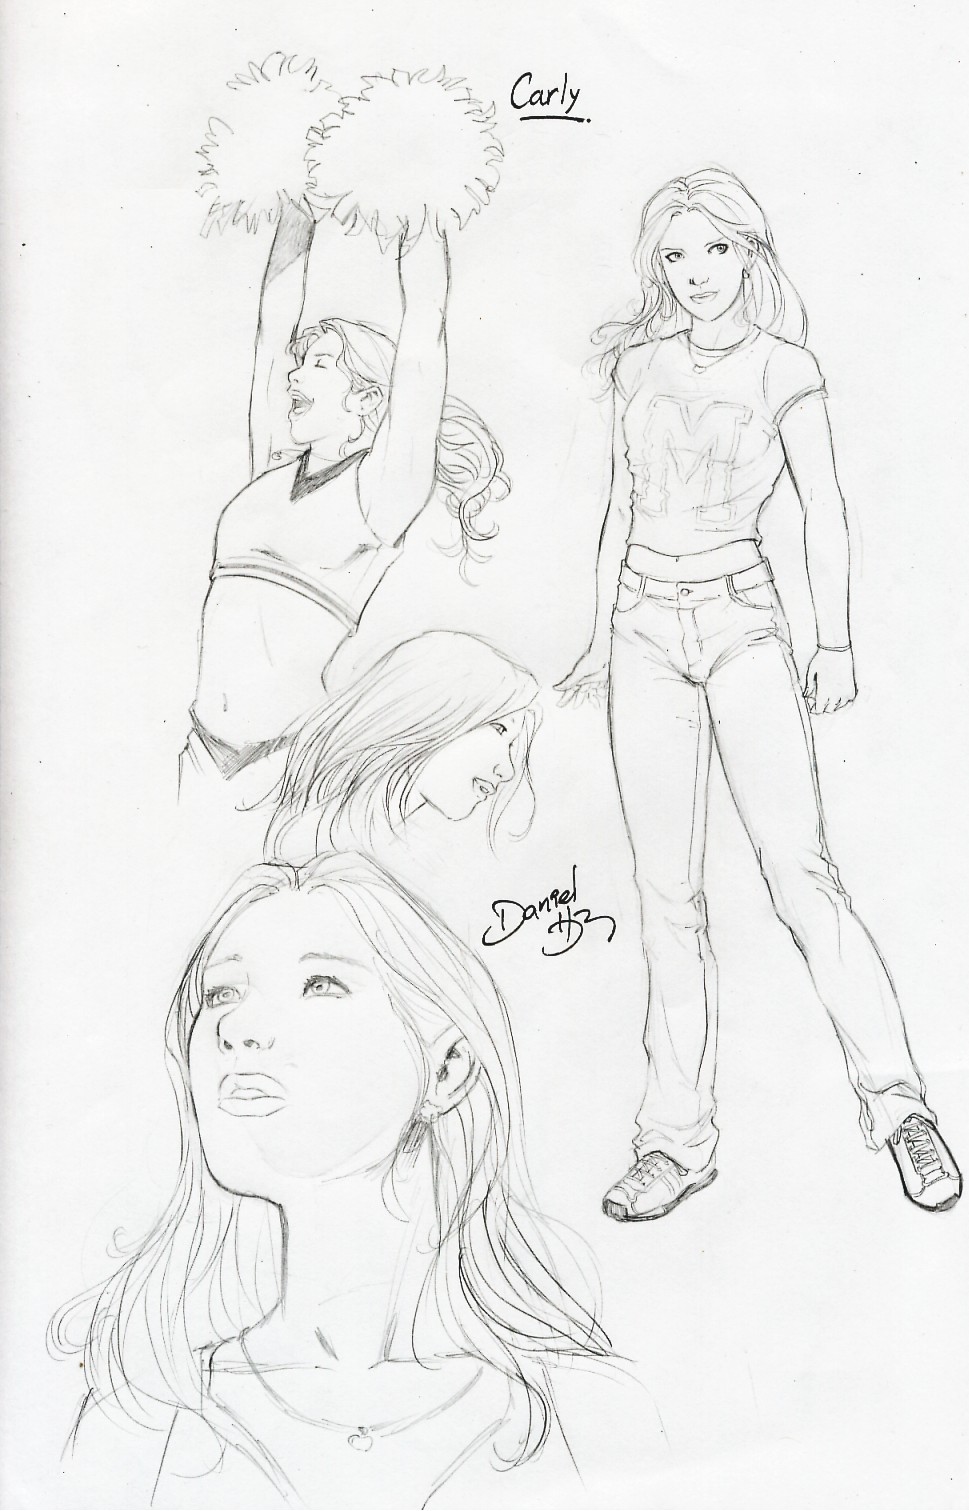 Machine Teen - character design - Carly